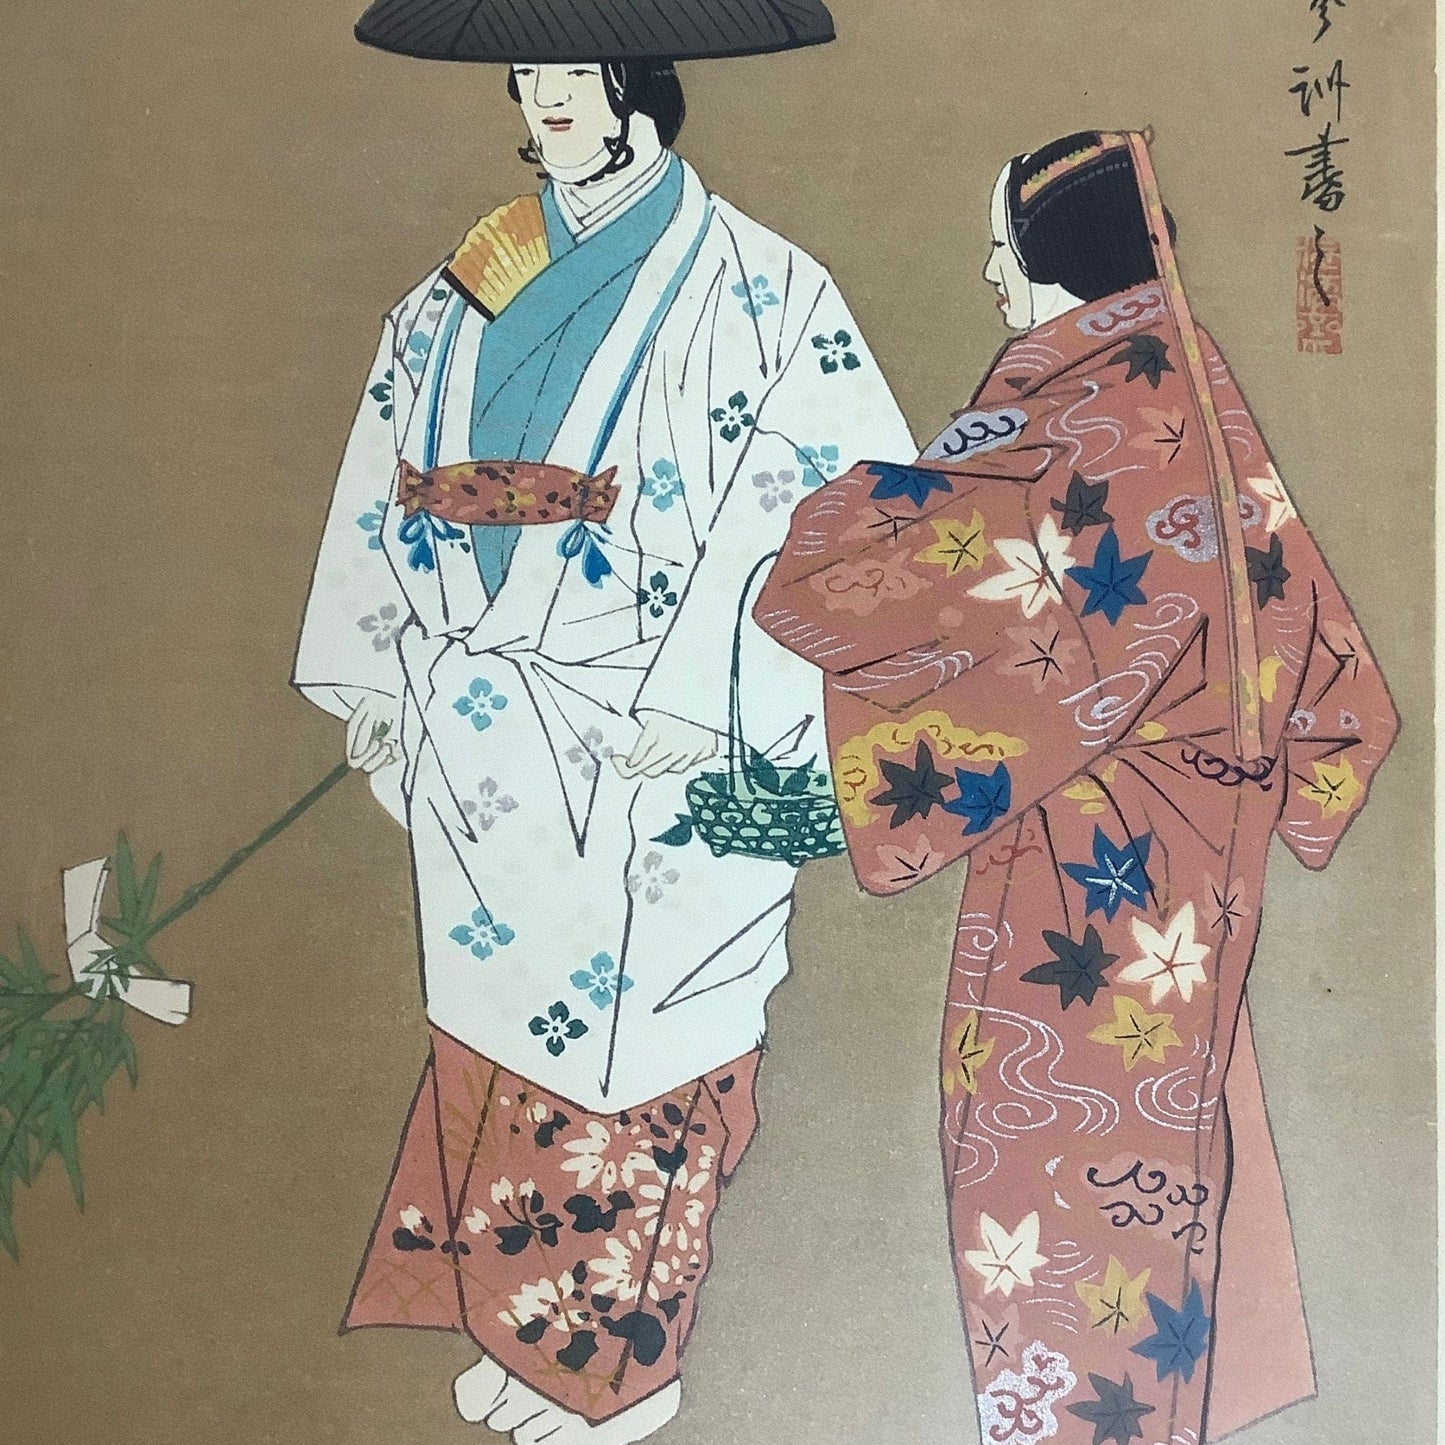 Vintage Kabuki Wall Art Multi / Mixed / Vintage 1930s